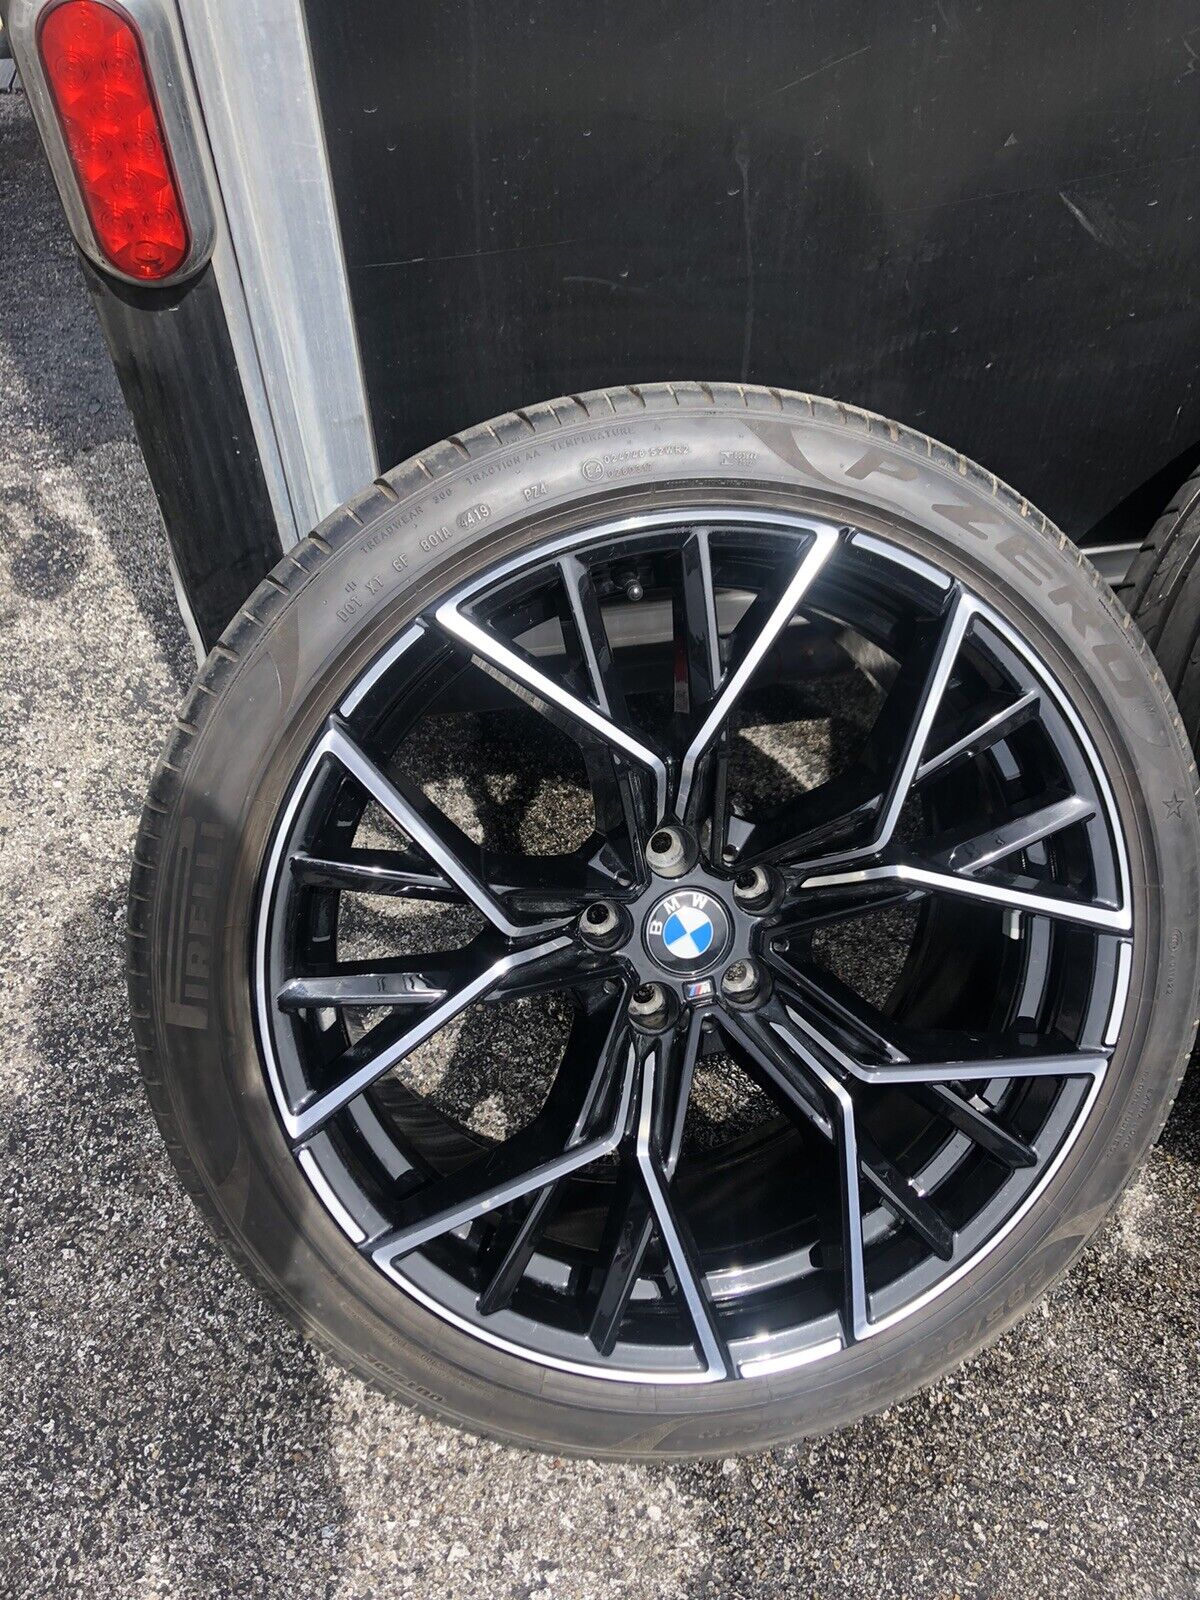 🚨Set M8 M3 M4 Style Wheels fit OEM Factory BMW 5x112 wheel tire🚨